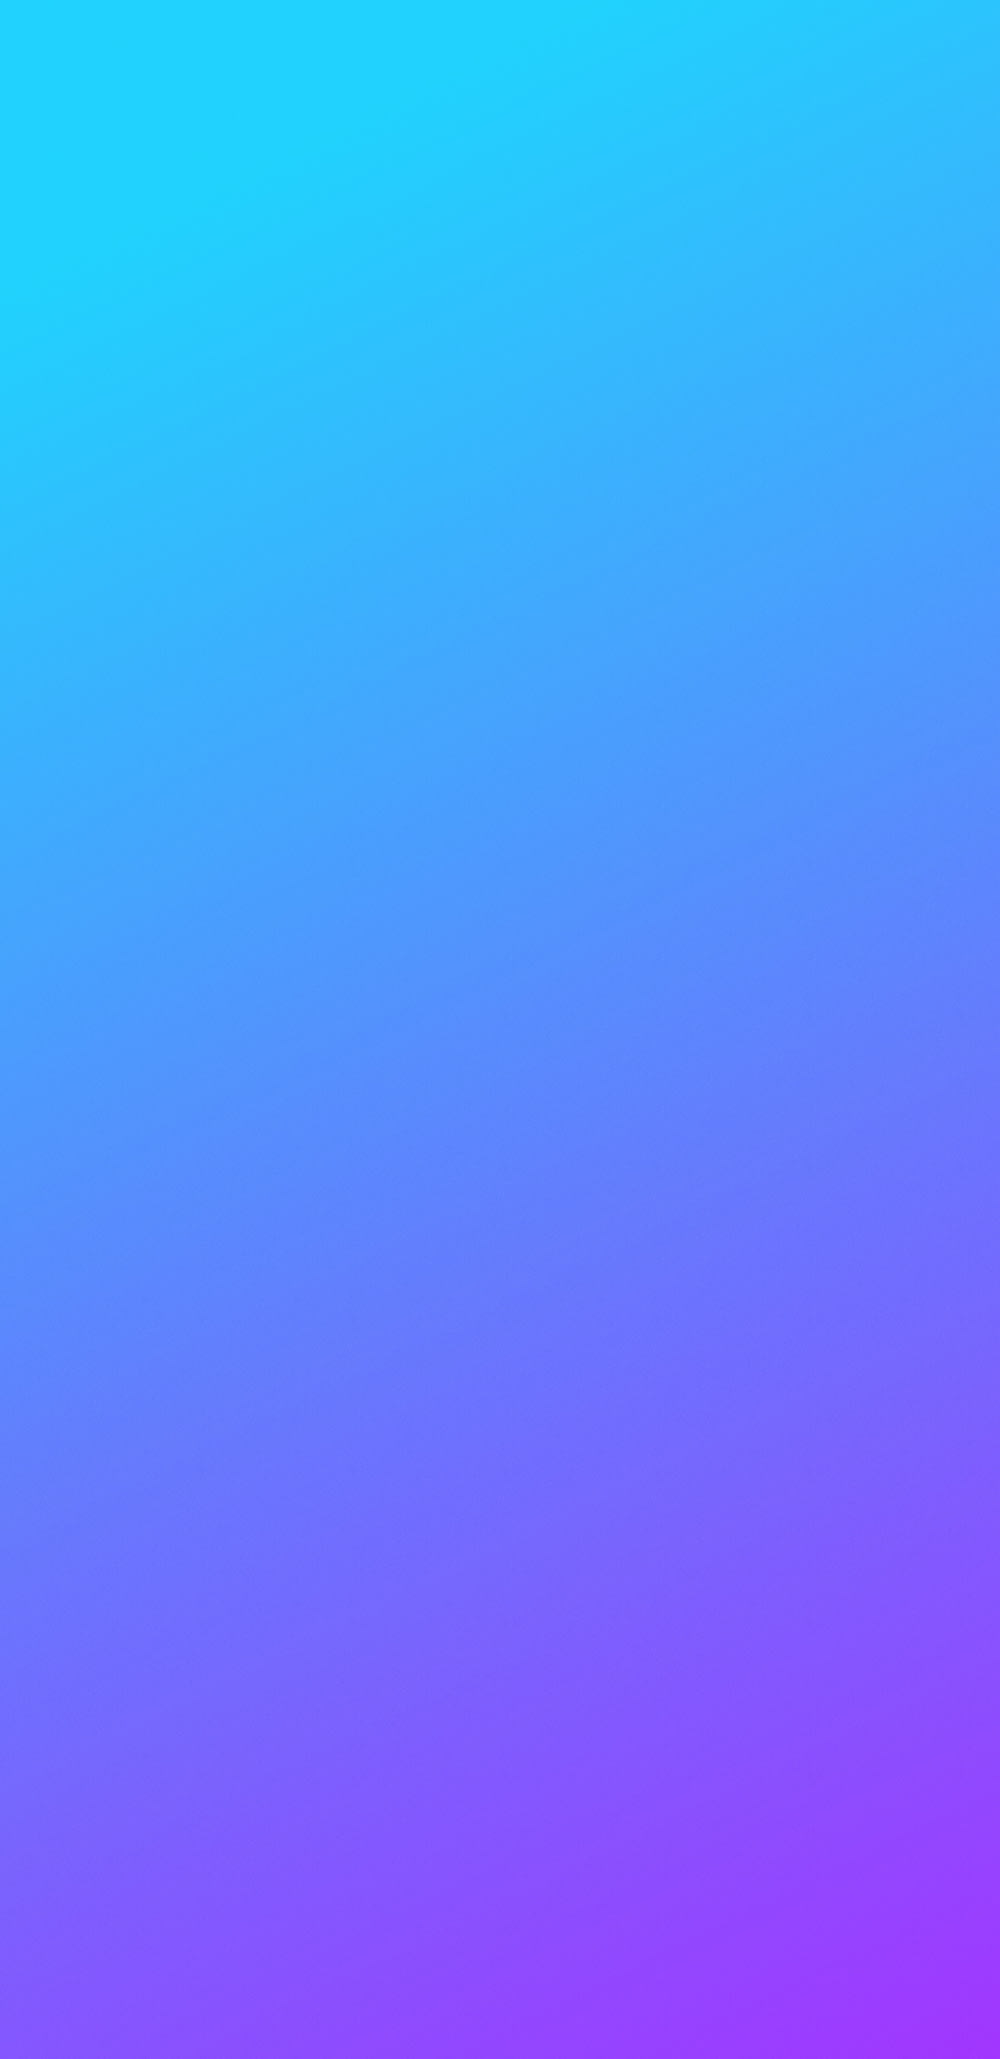 Light blue to purple gradient